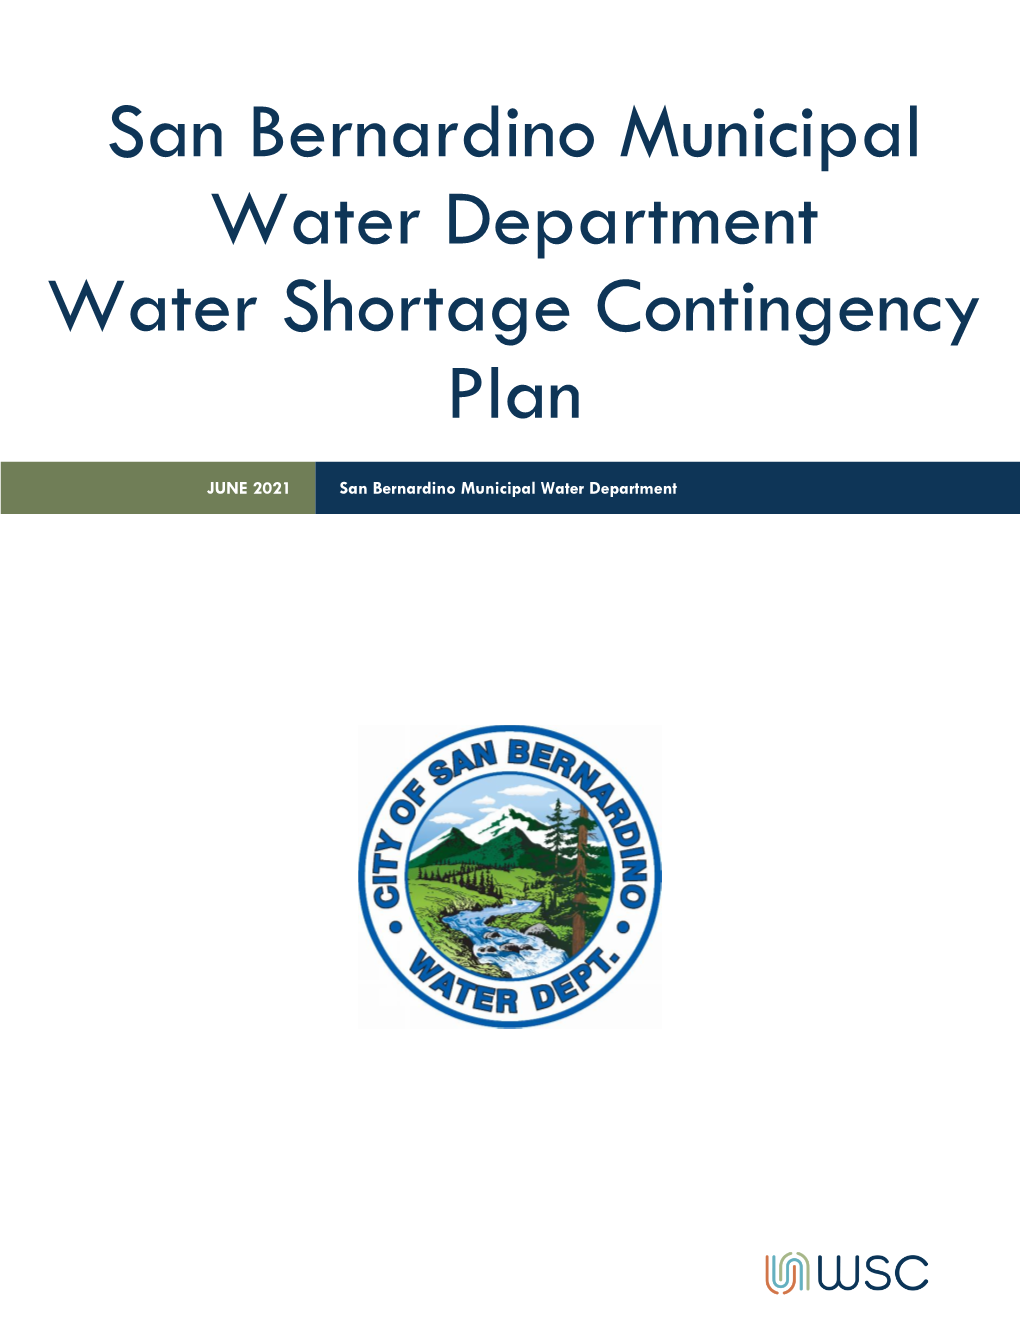 San Bernardino Municipal Water Department Water Shortage Contingency Plan